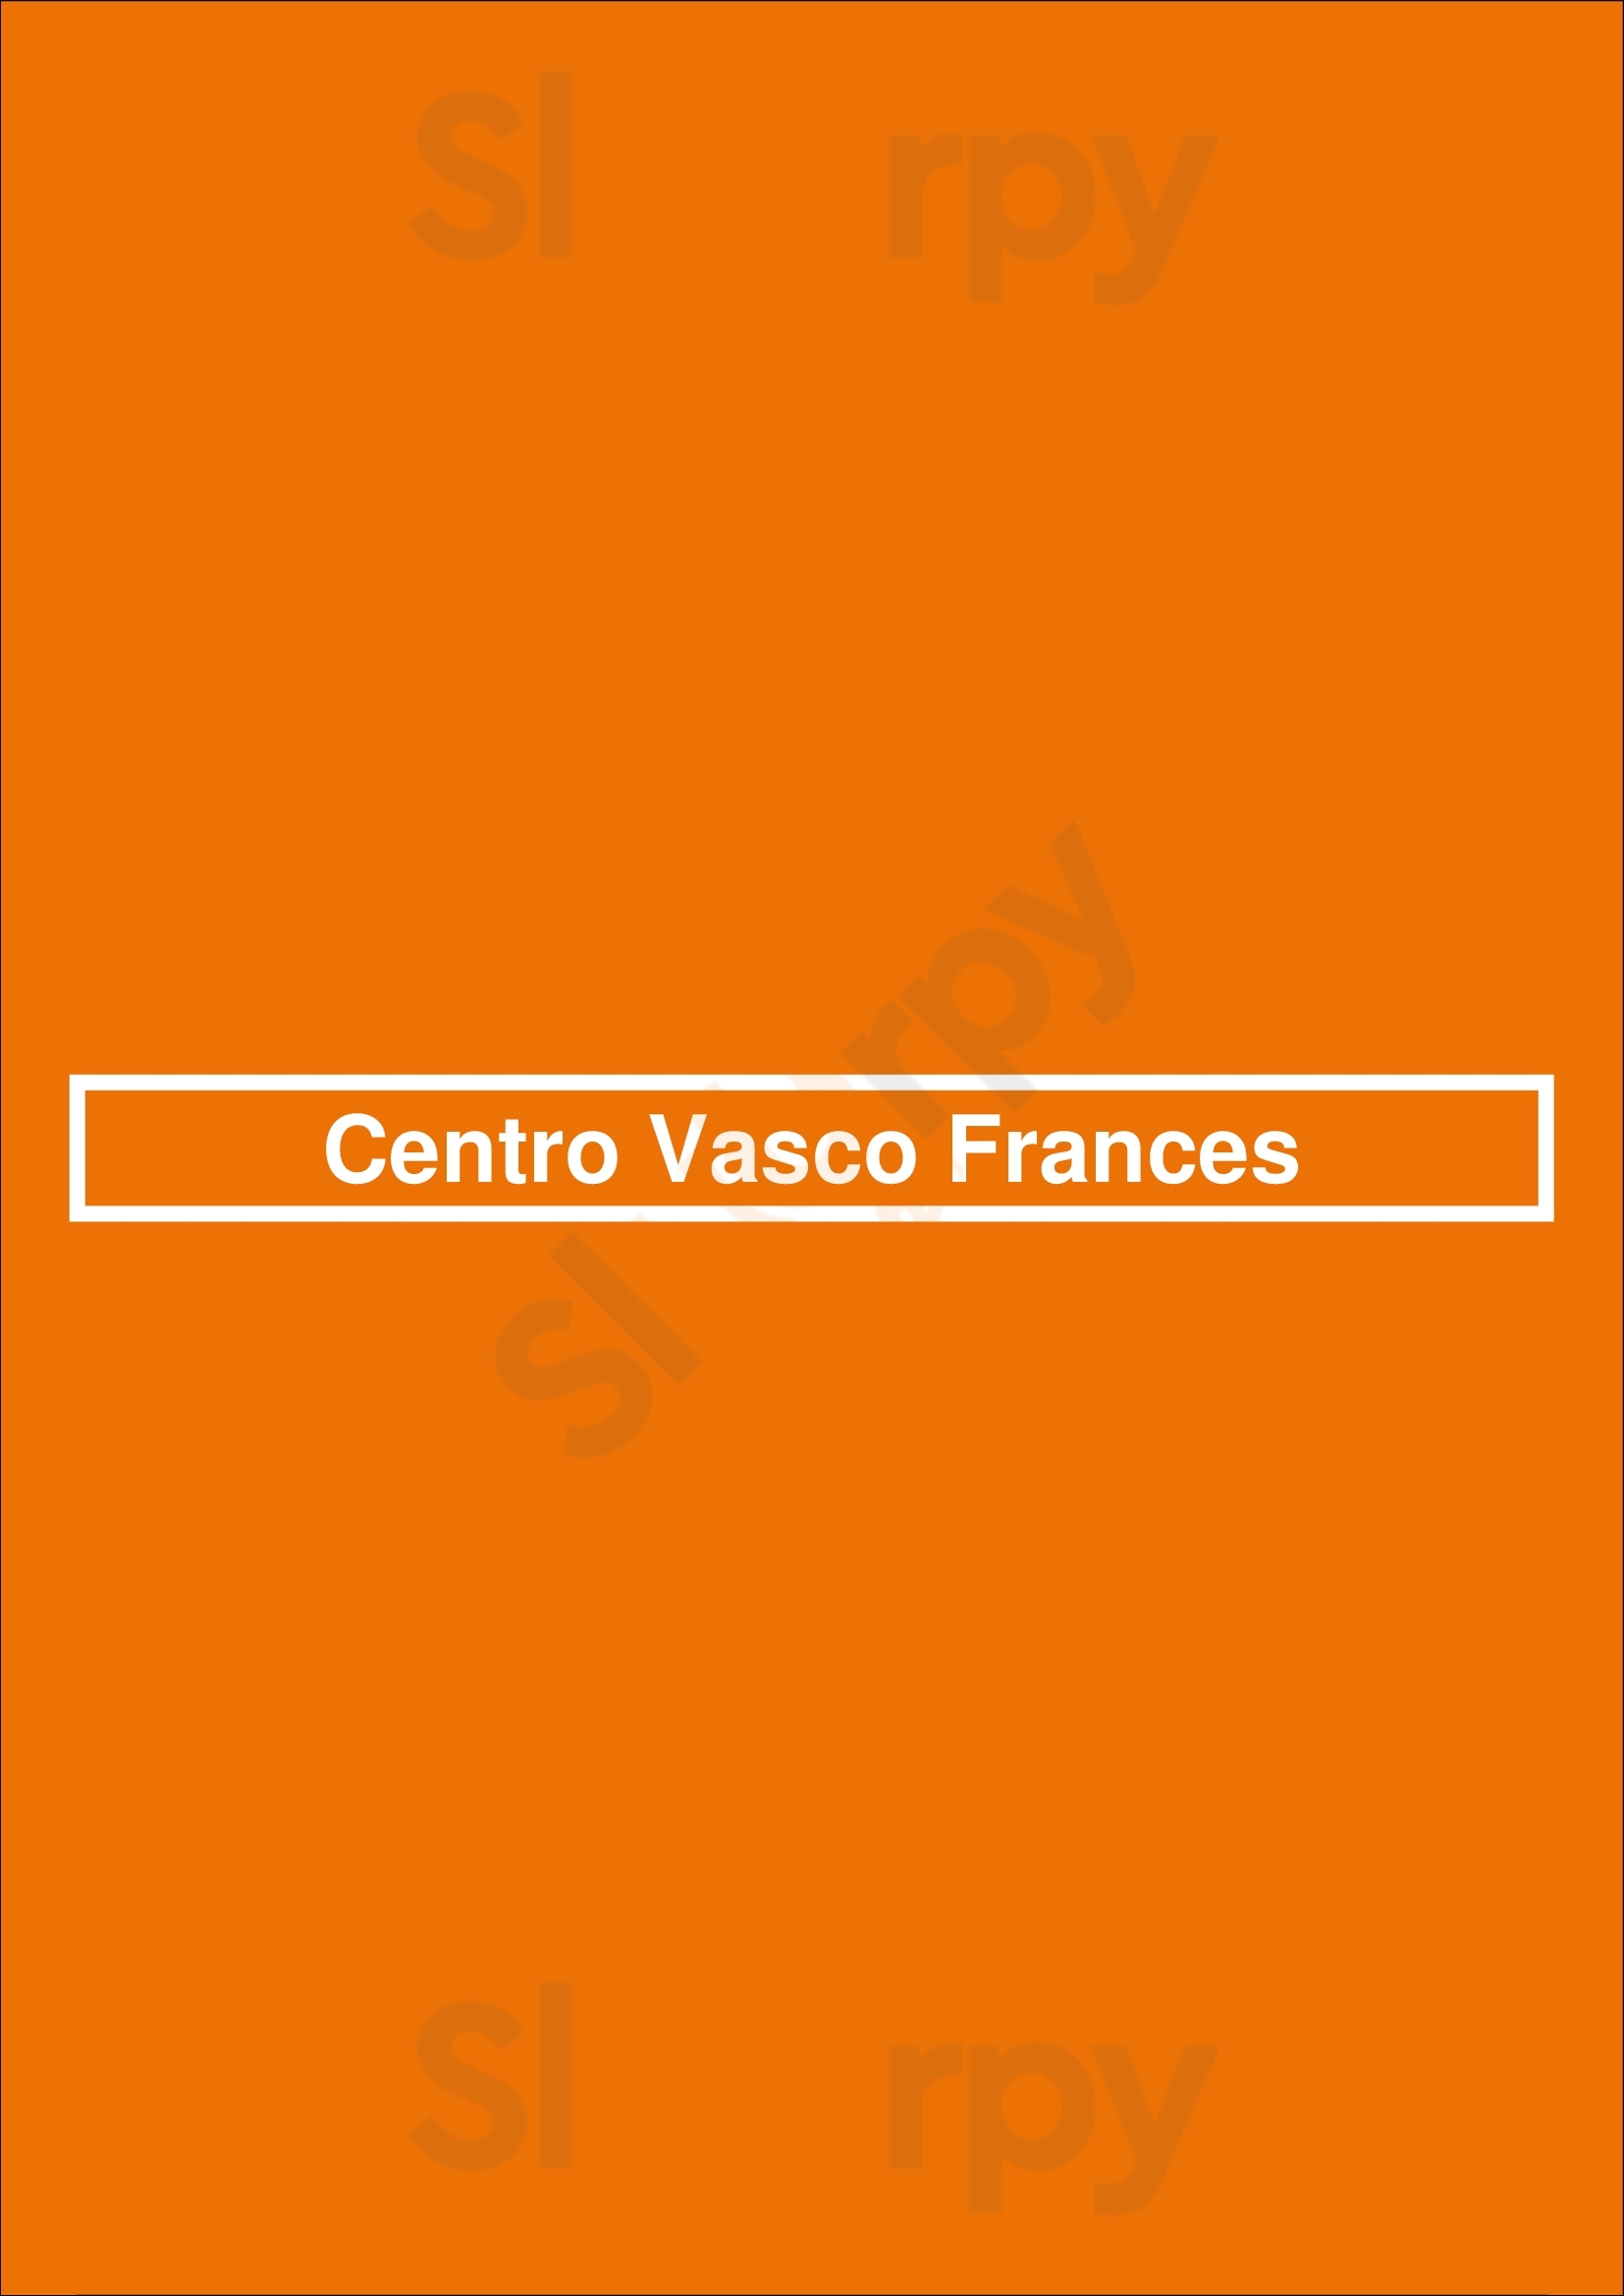 Centro Vasco Frances Buenos Aires Menu - 1